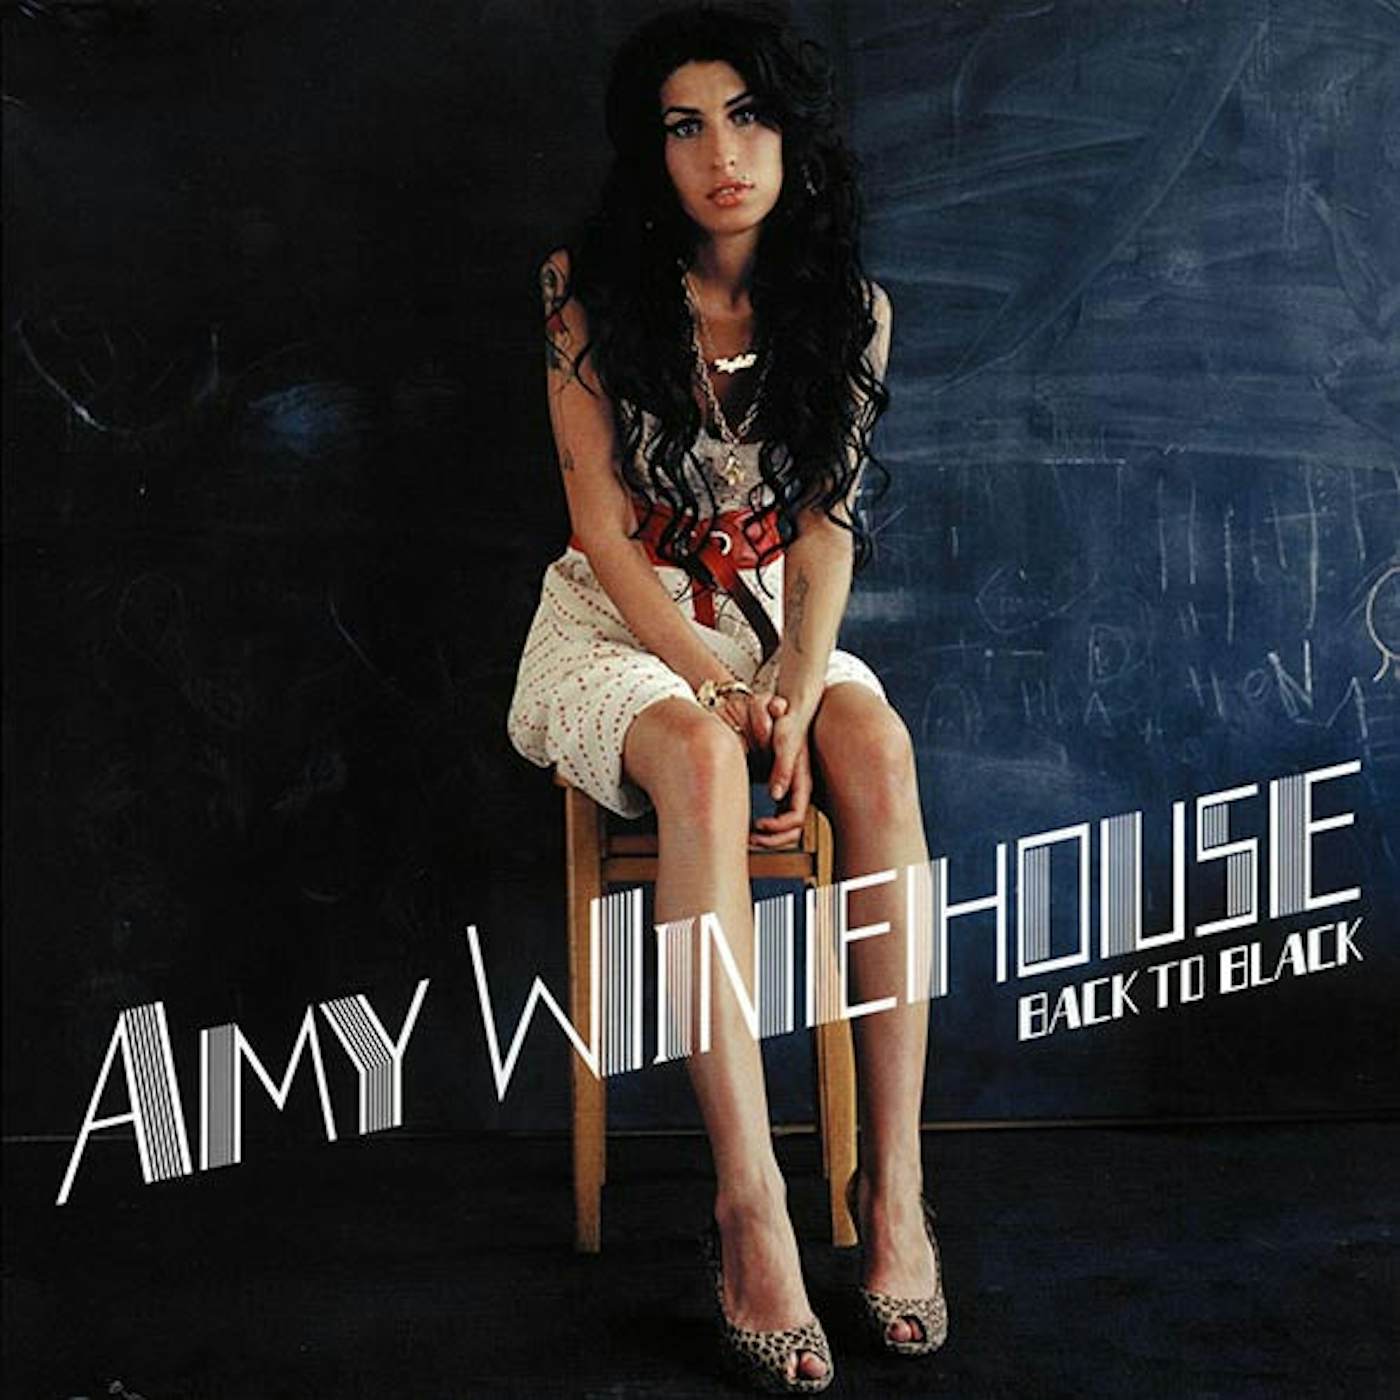 Amy Winehouse Frank Limited Vinilo Color Lp 2019